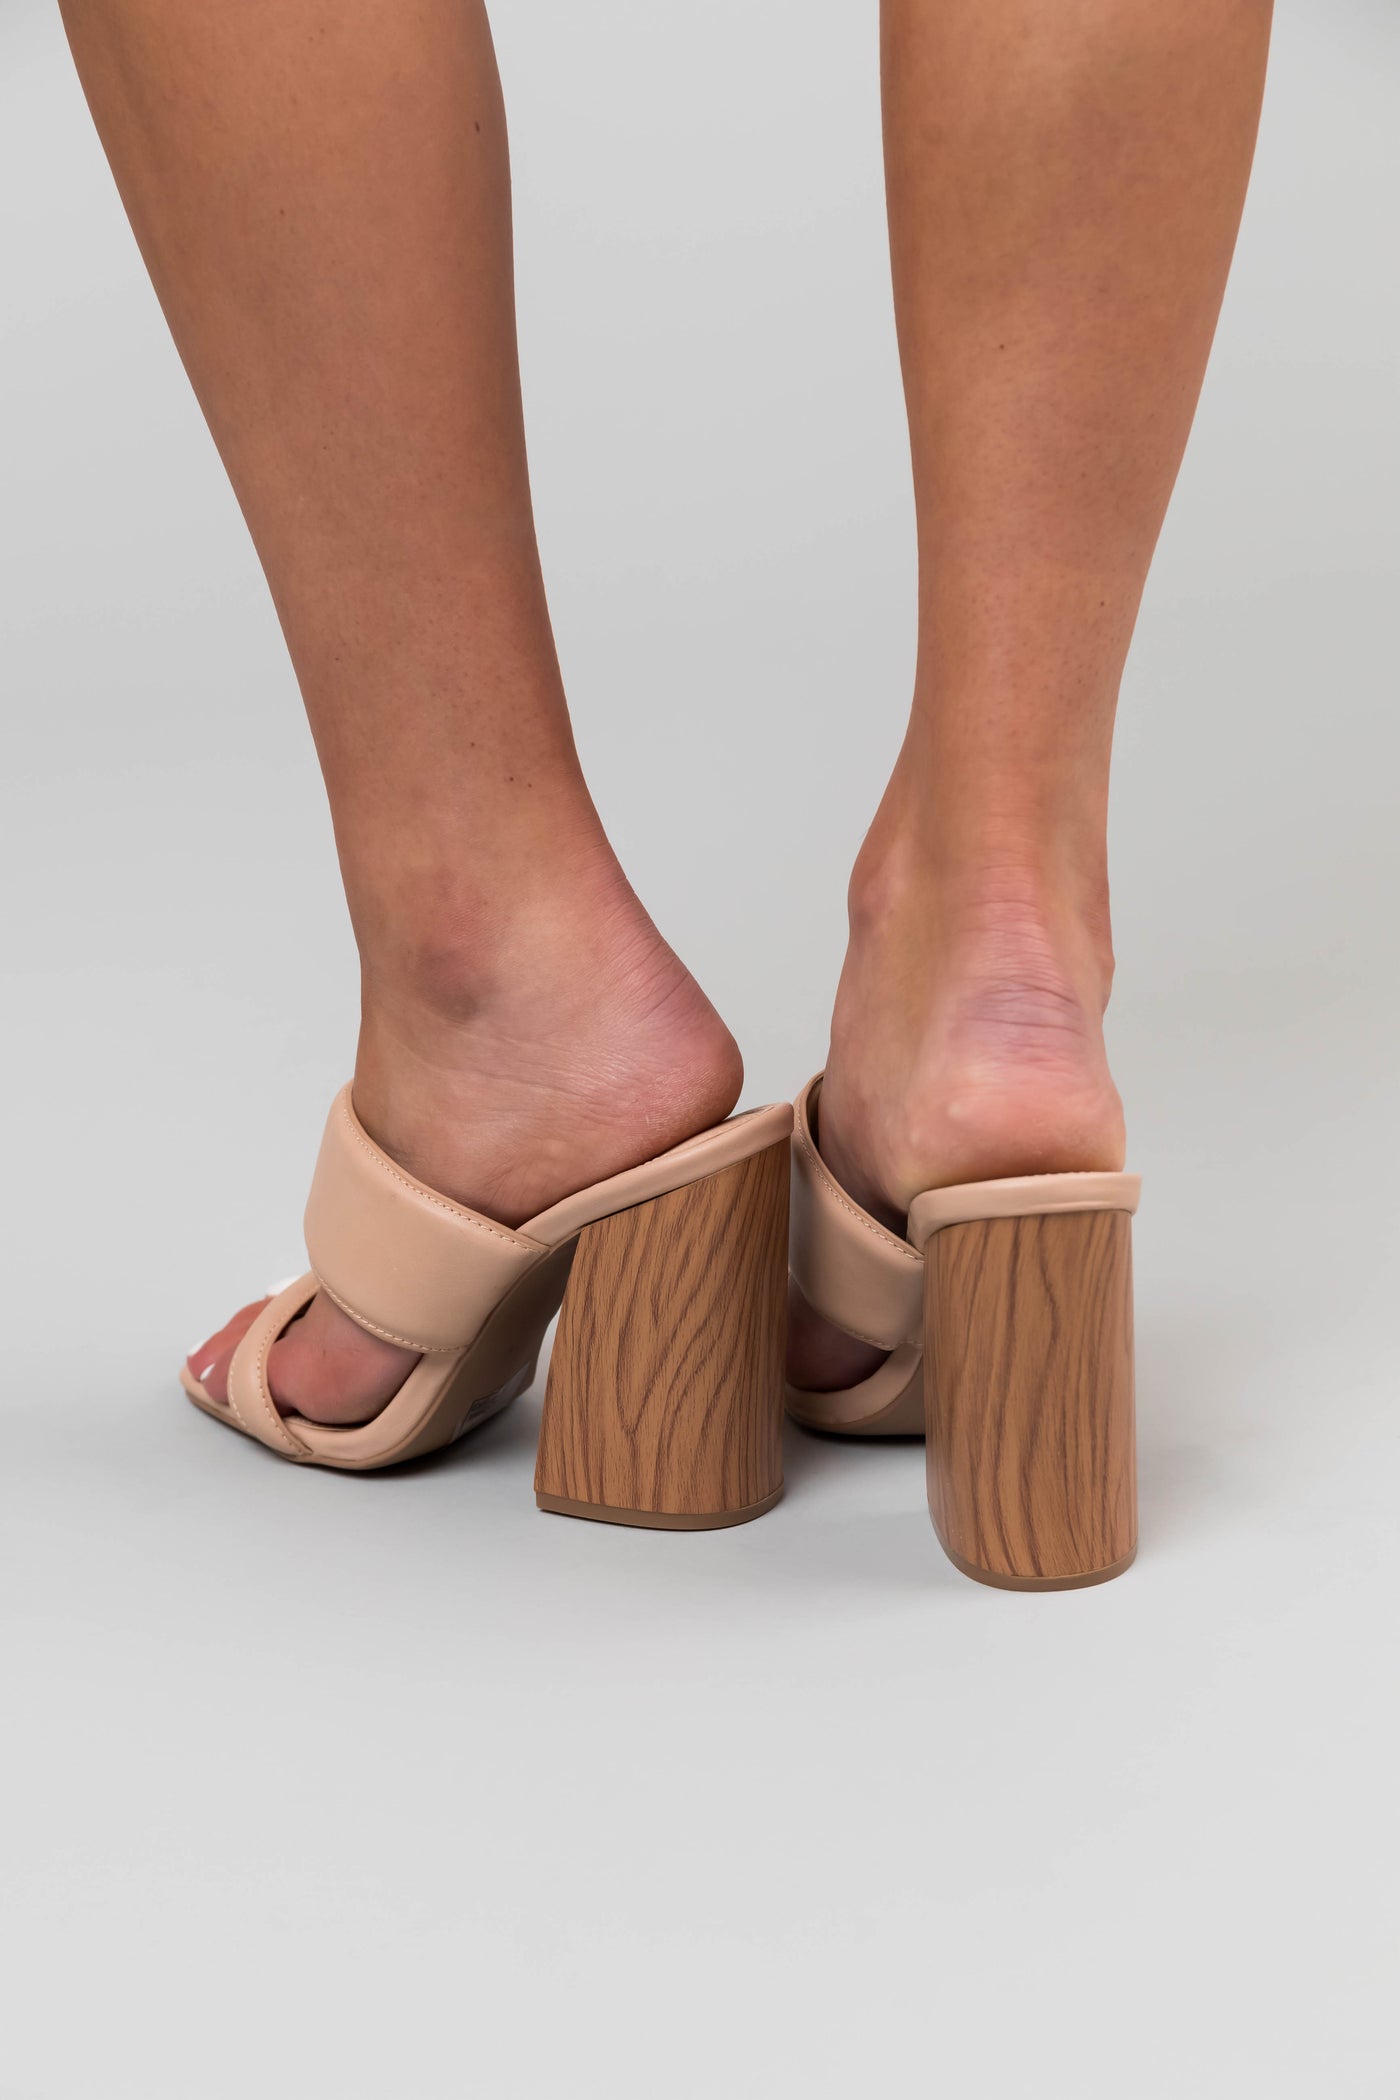 Nude Dual Band Slip On Wood High Heels